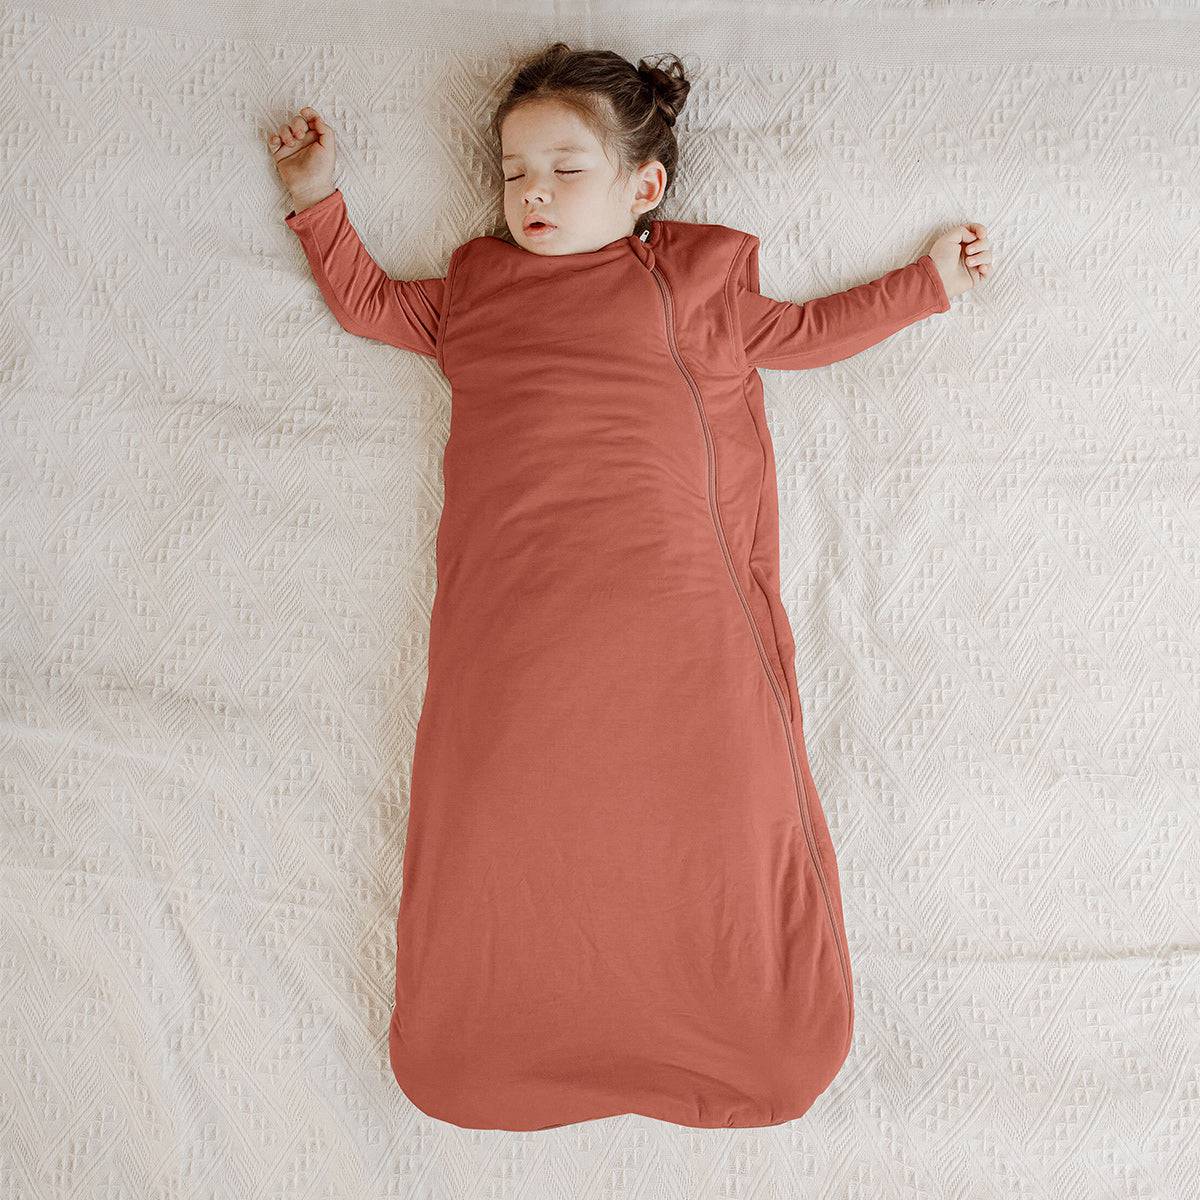 Kaiya Angel - Baby Bamboo Quilted Sleeveless Sleep Sack TOG 1.0 - Red Brown